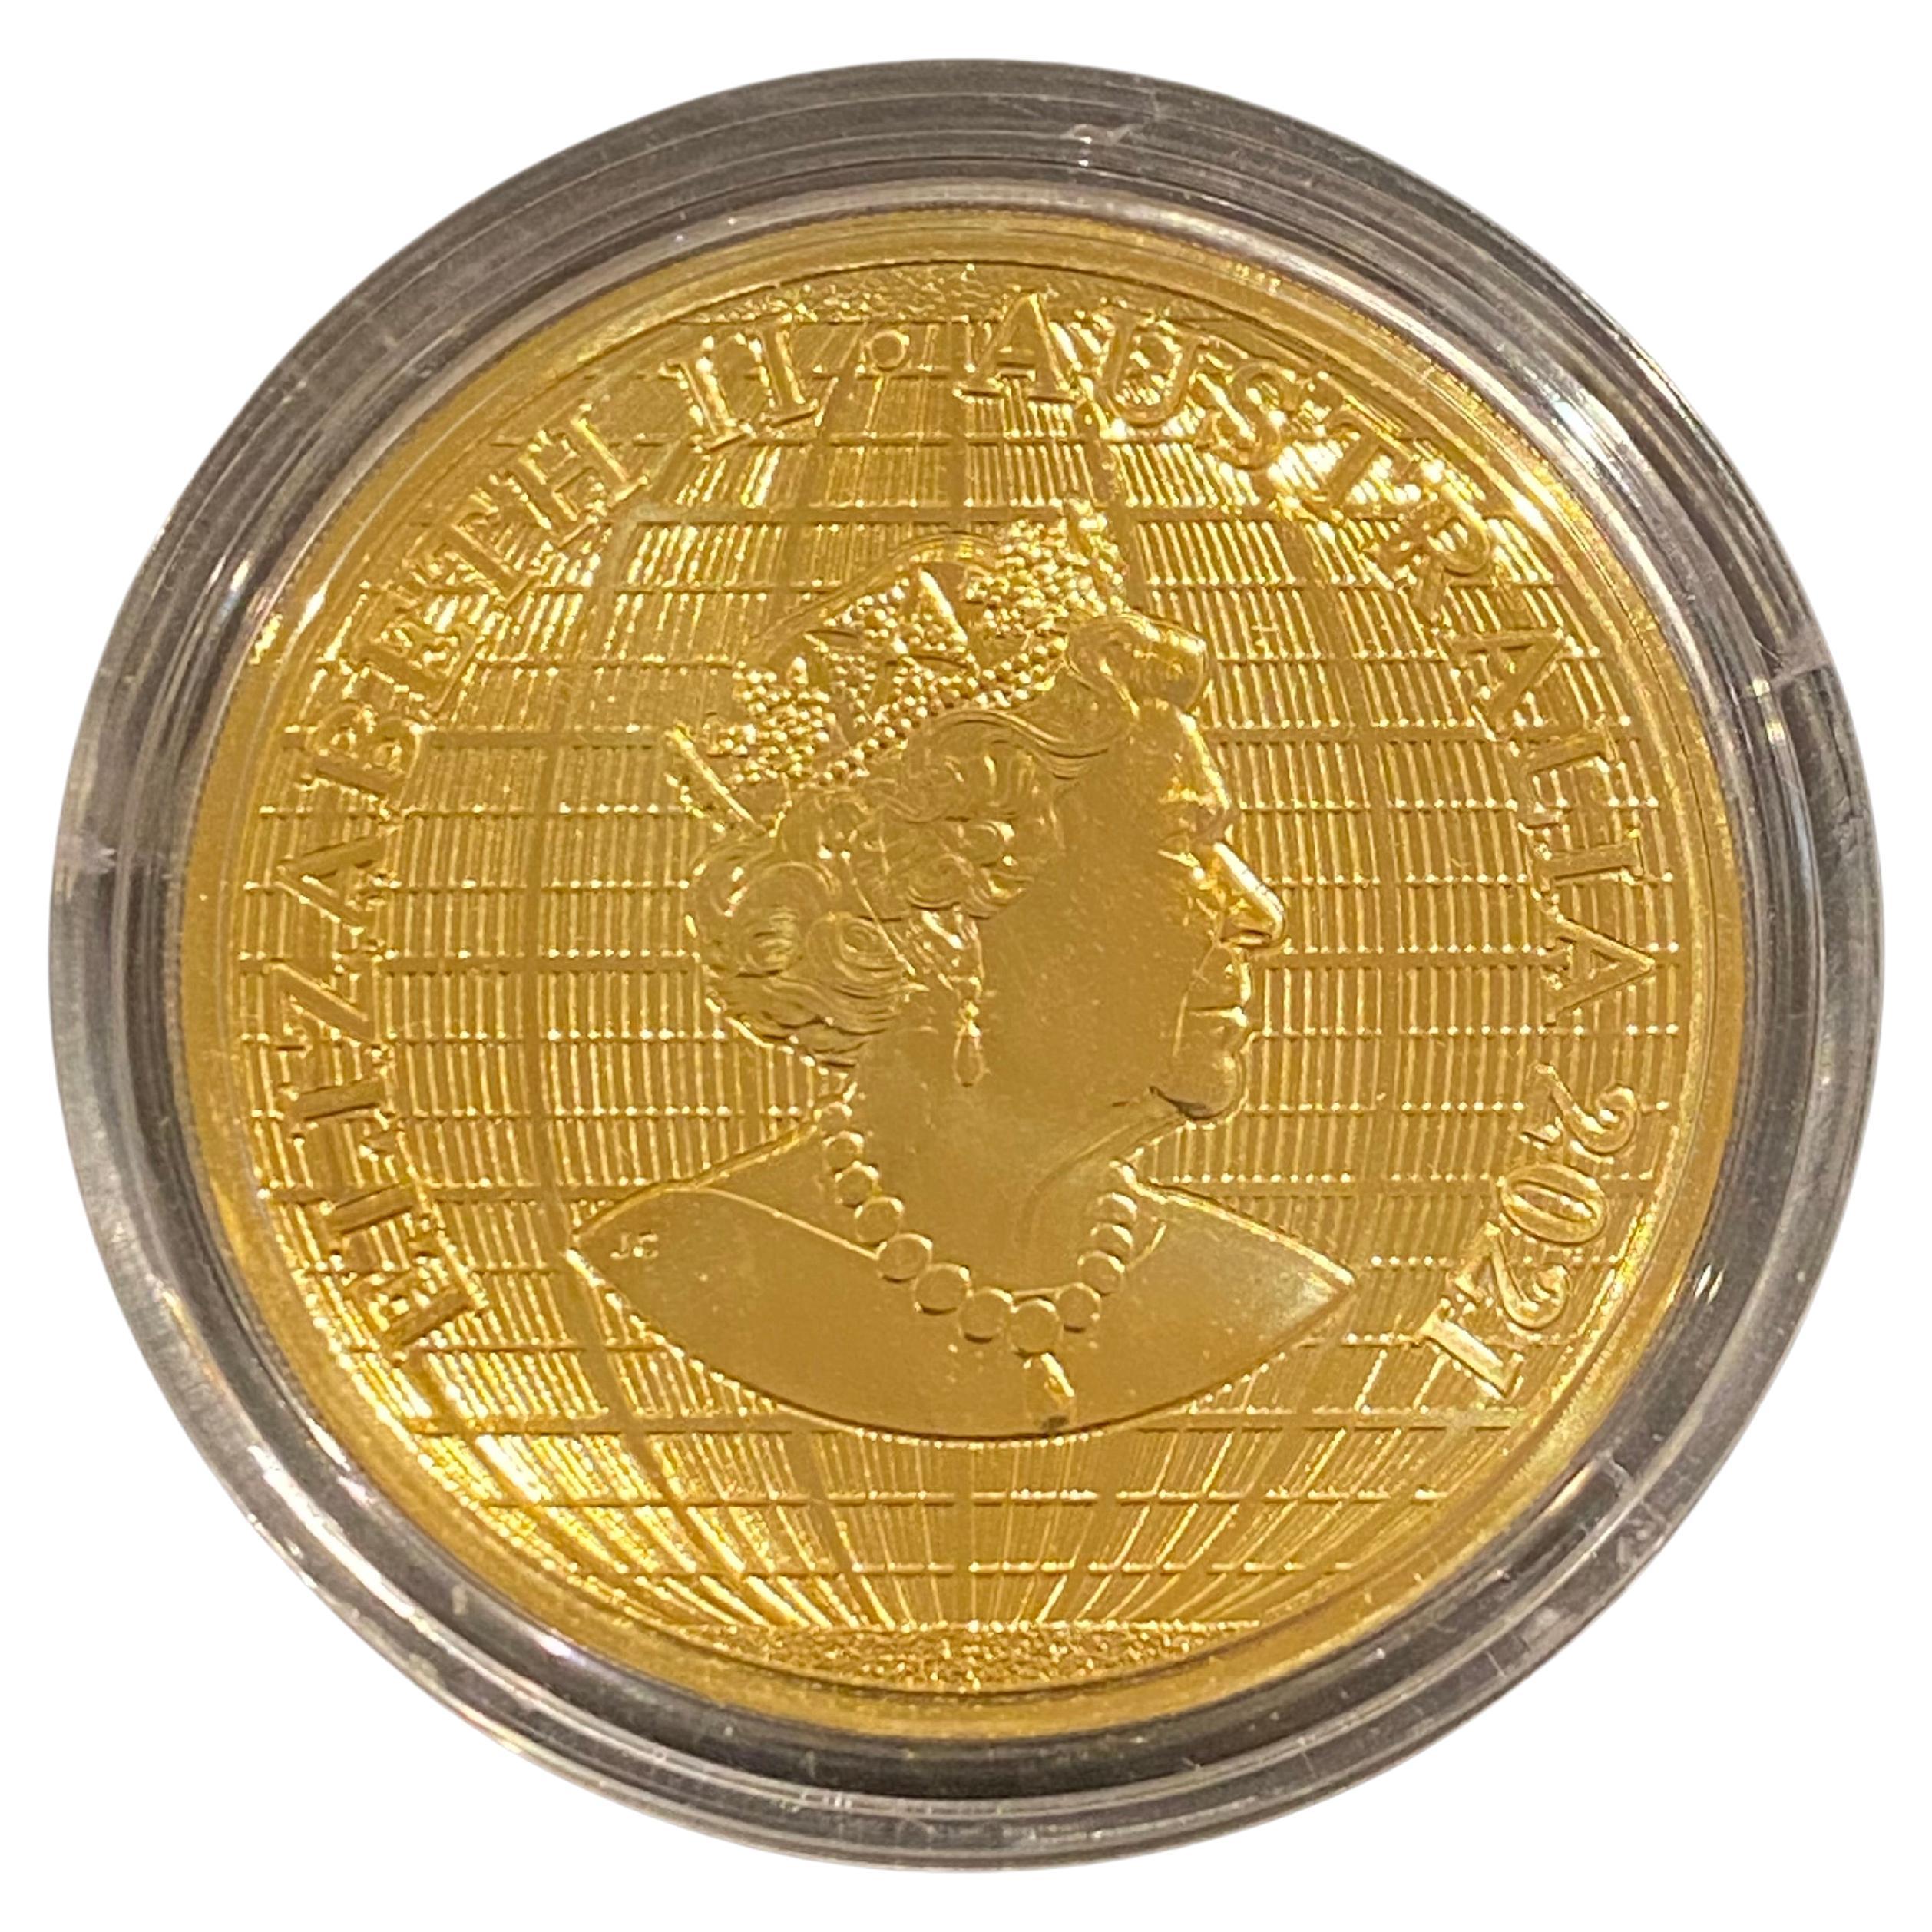 Scarce 1 Ounce (OZ) 9999 Gold $100 Australian Coin
